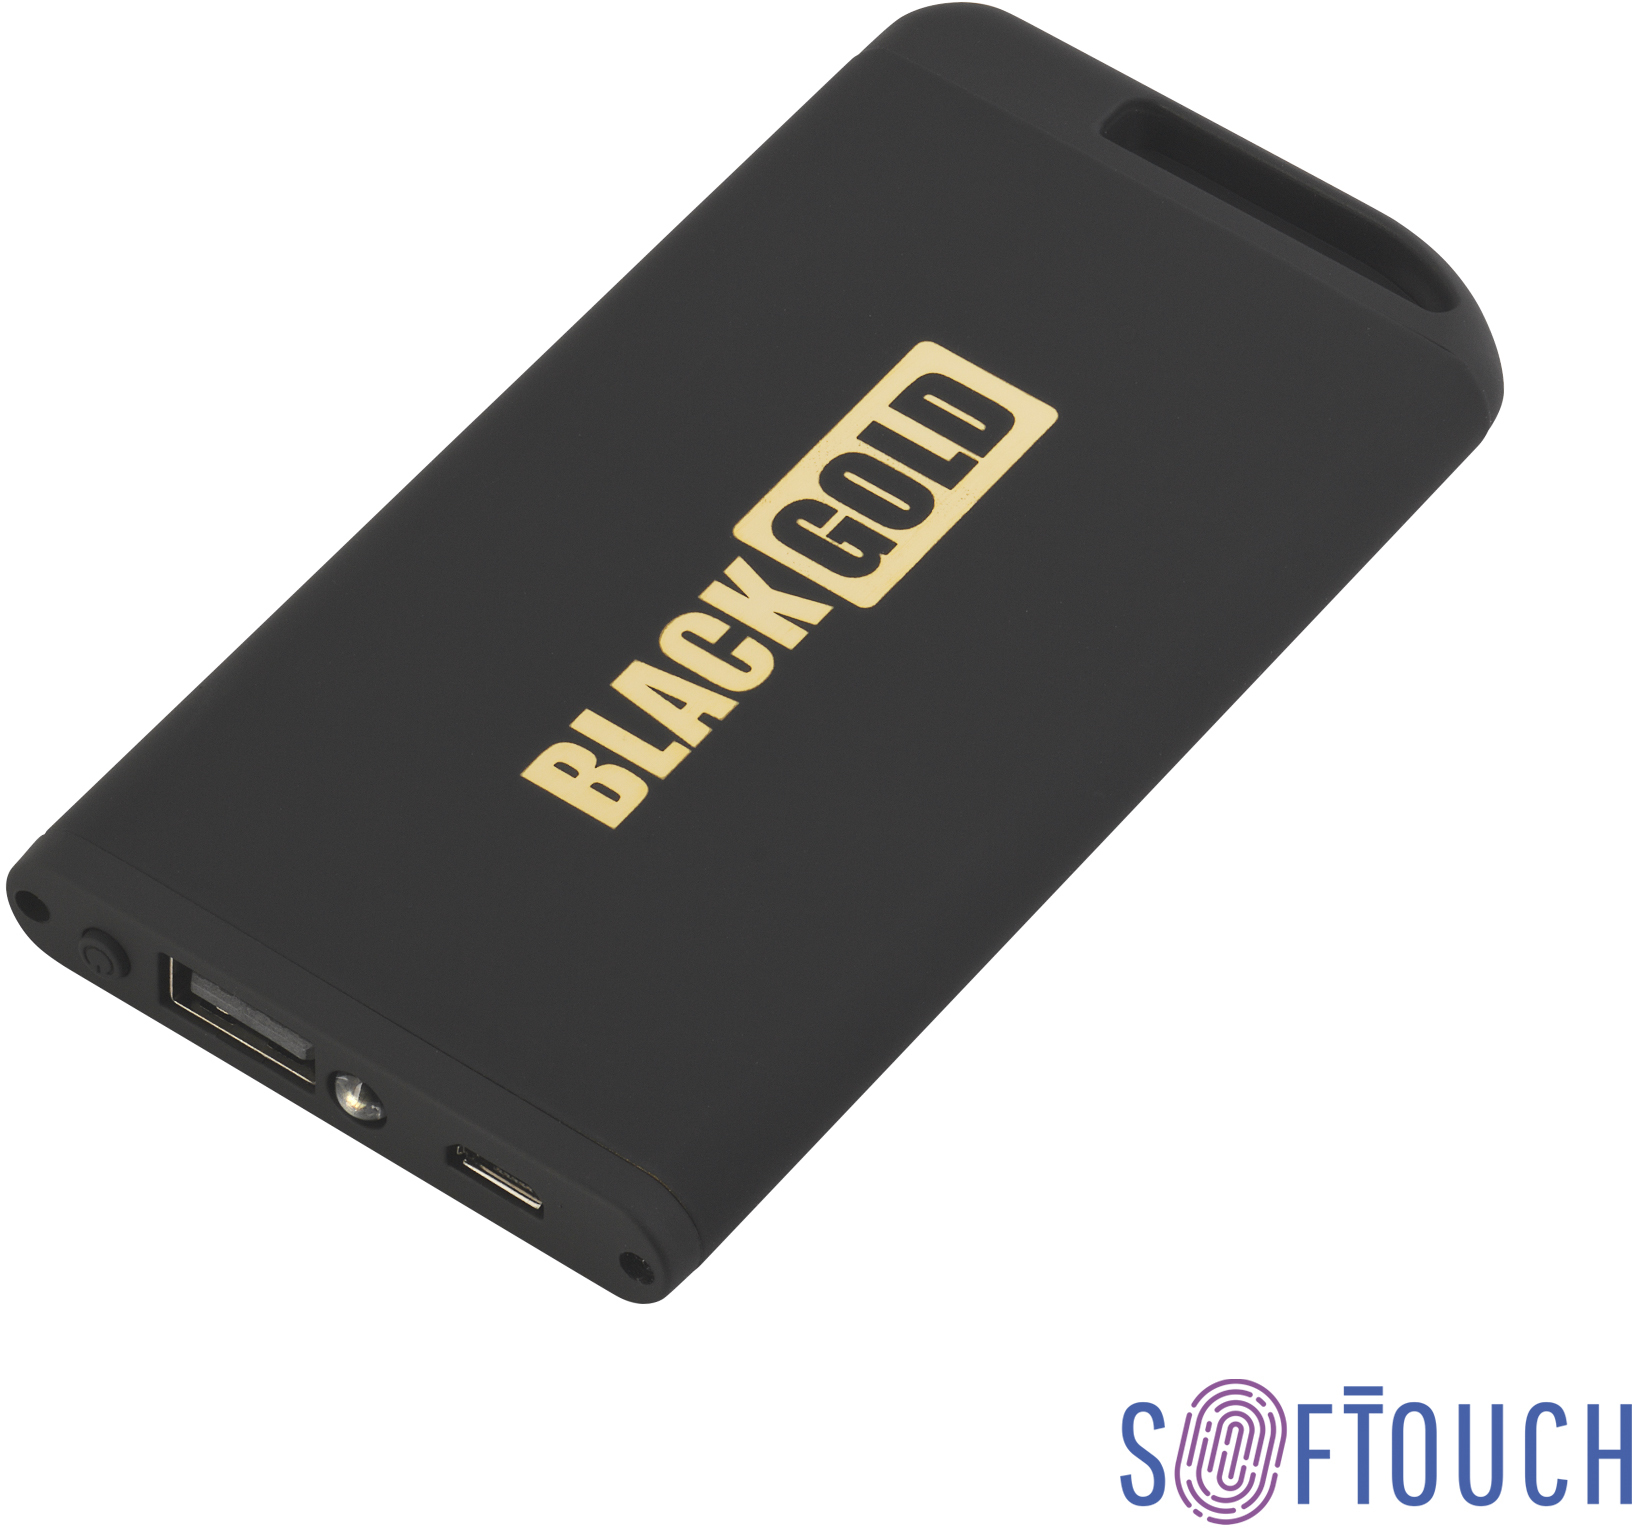 Артикул: E6871-3G — Зарядное устройство "Theta" с фонариком, 4000 mAh, покрытие soft touch